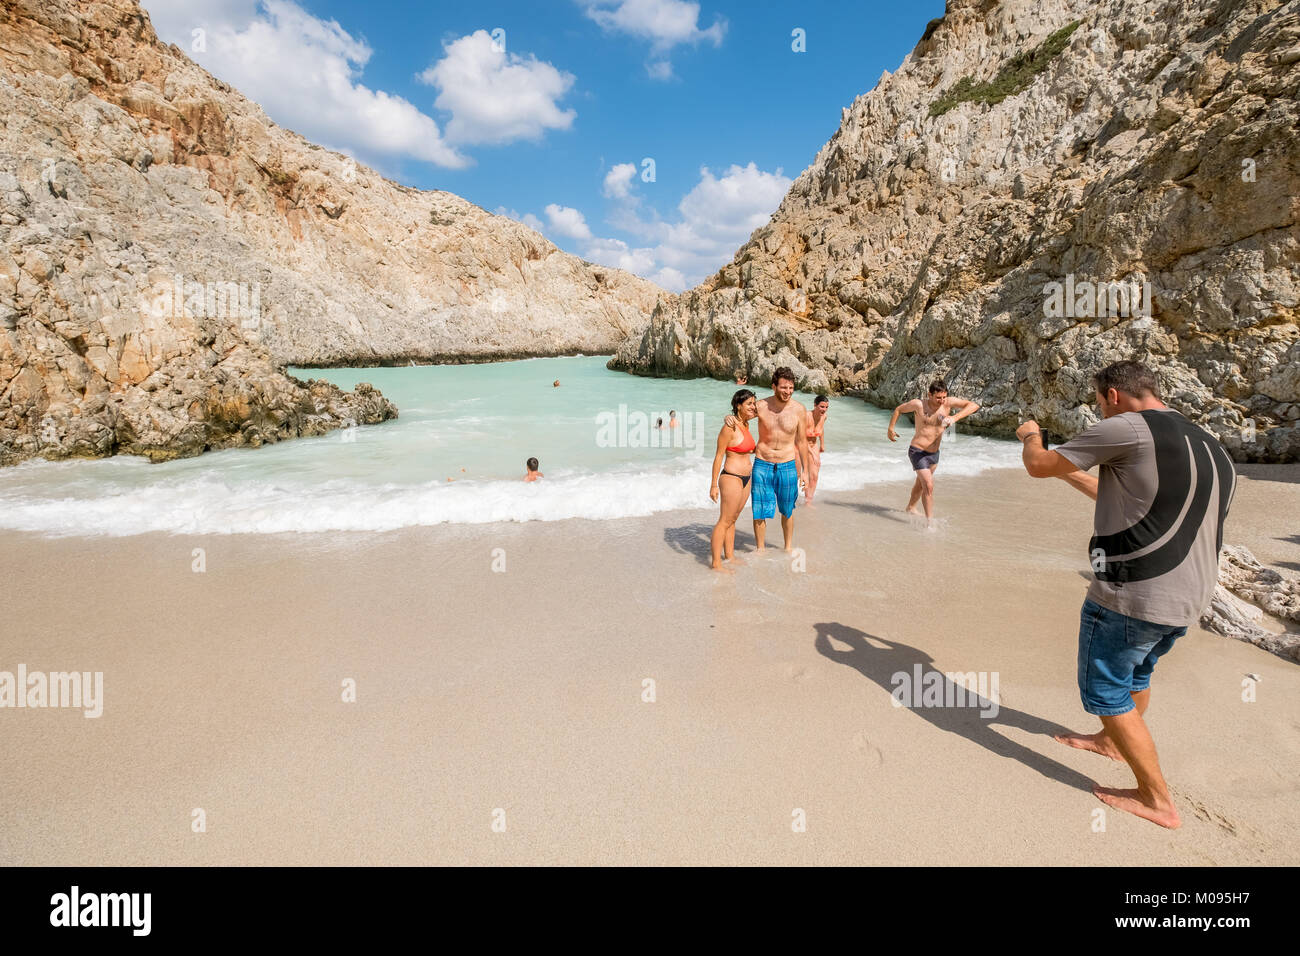 Seitan limania beach, versteckte Badebucht, Traumstrand, Chania, Europa, Kreta, Griechenland, Chania, Europa, Kreta, Griechenland, GR, Reise, Tourismu Foto Stock